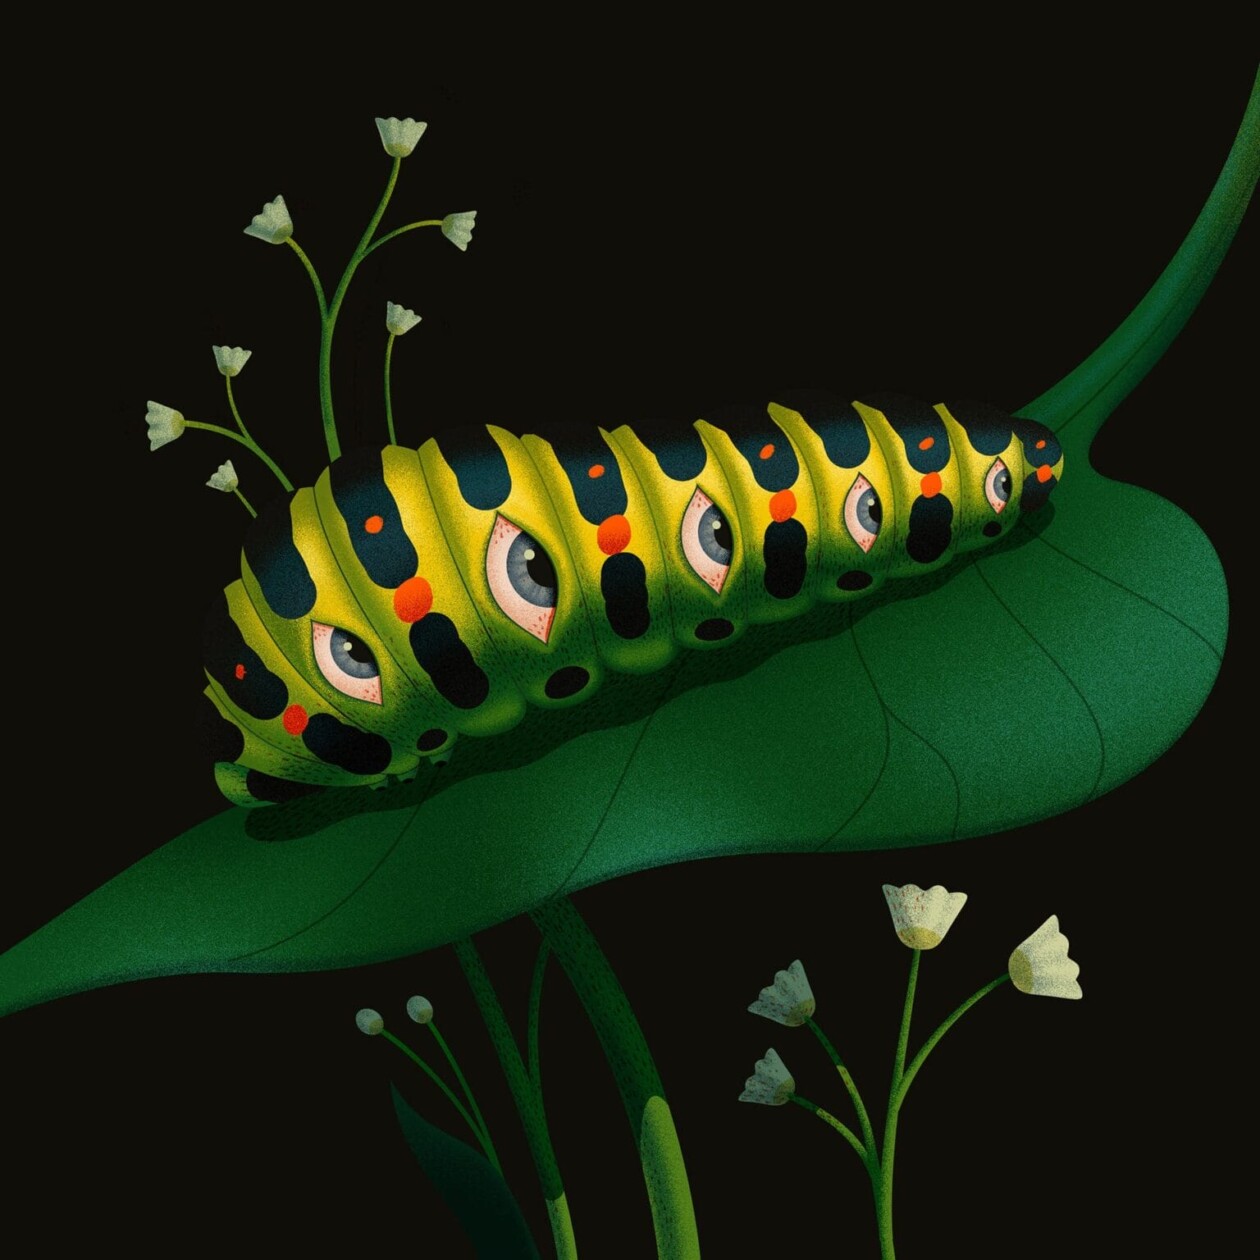 Marvelous Surrealistic Illustrations Of Eyes Peering From Plants And Animals By Ana Miminoshvili (14)